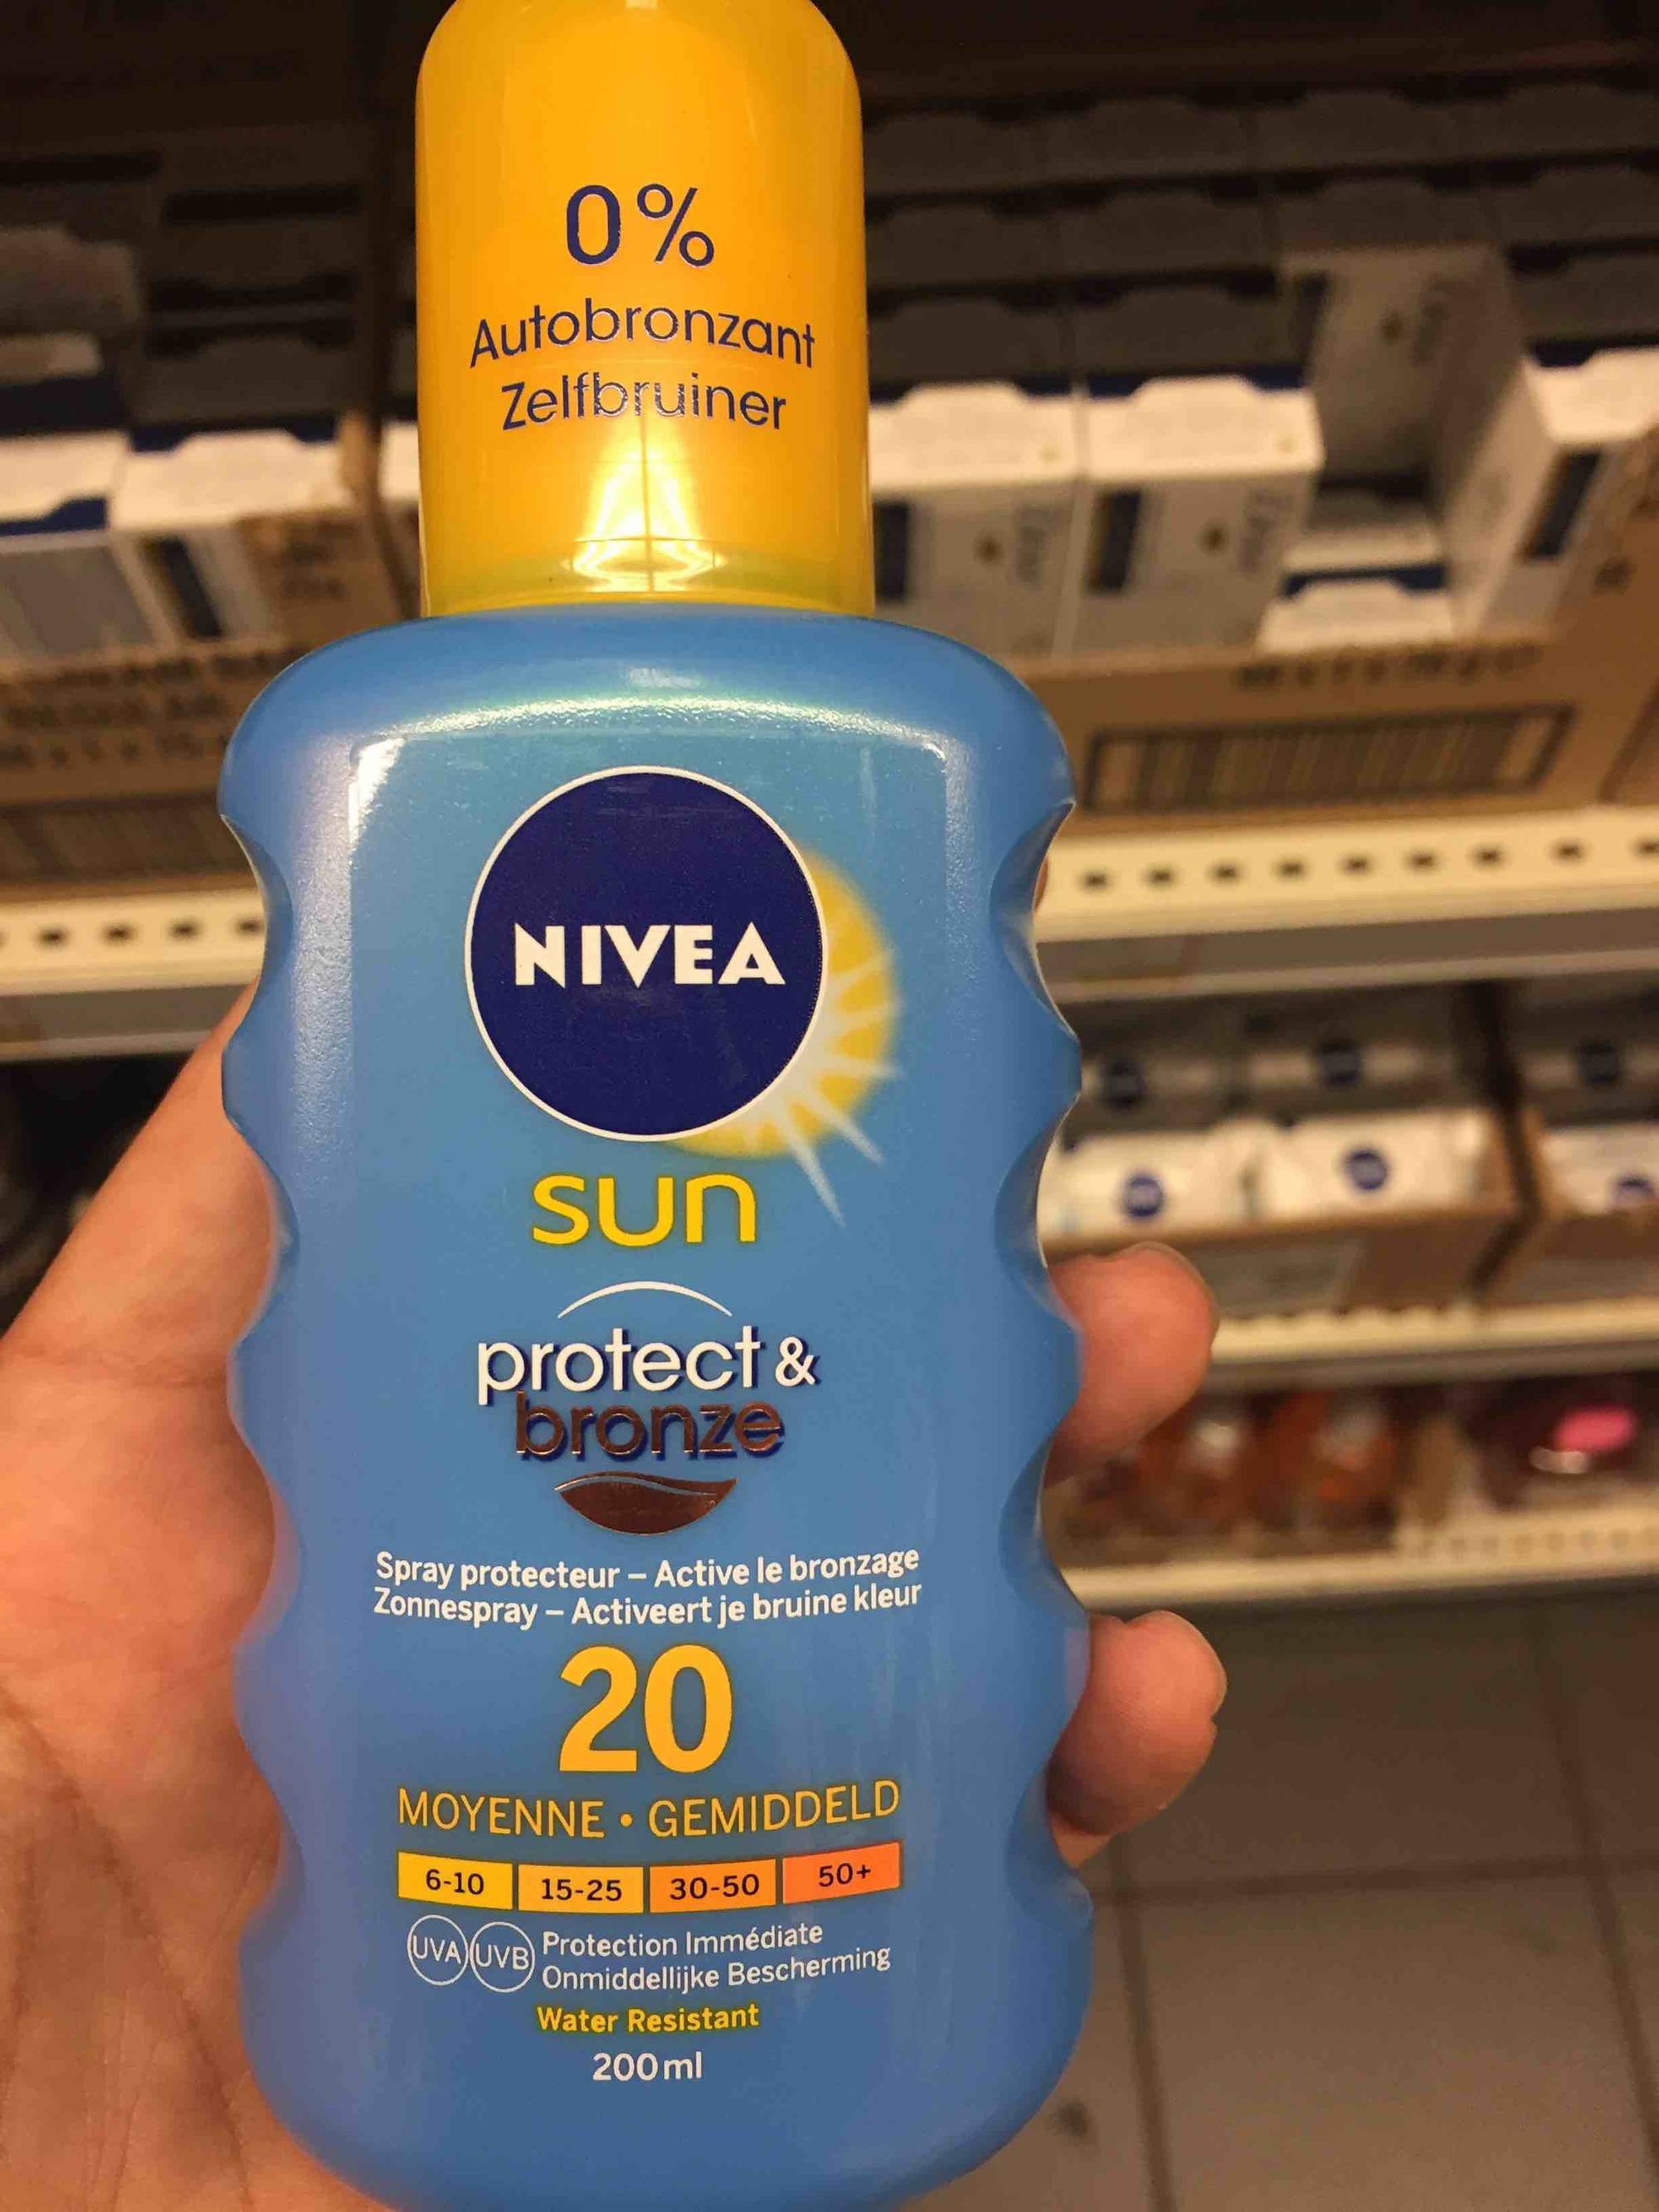 NIVEA - Sun protect & bronze - Spray protecteur 20 moyenne